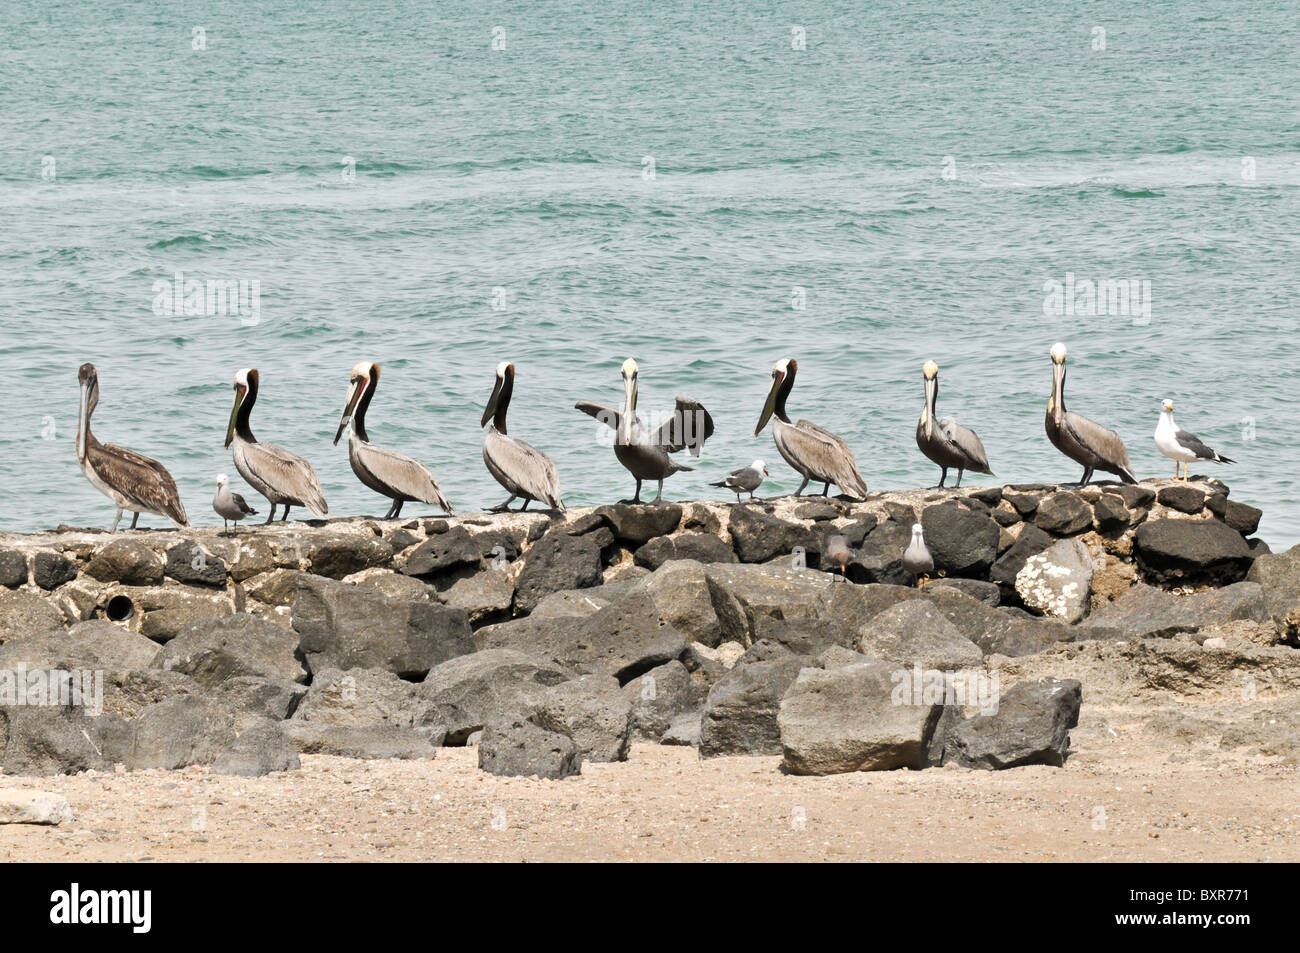 Pelicans on edge of sea, Puerto Penasco, Sonora, Mexico Stock Photo